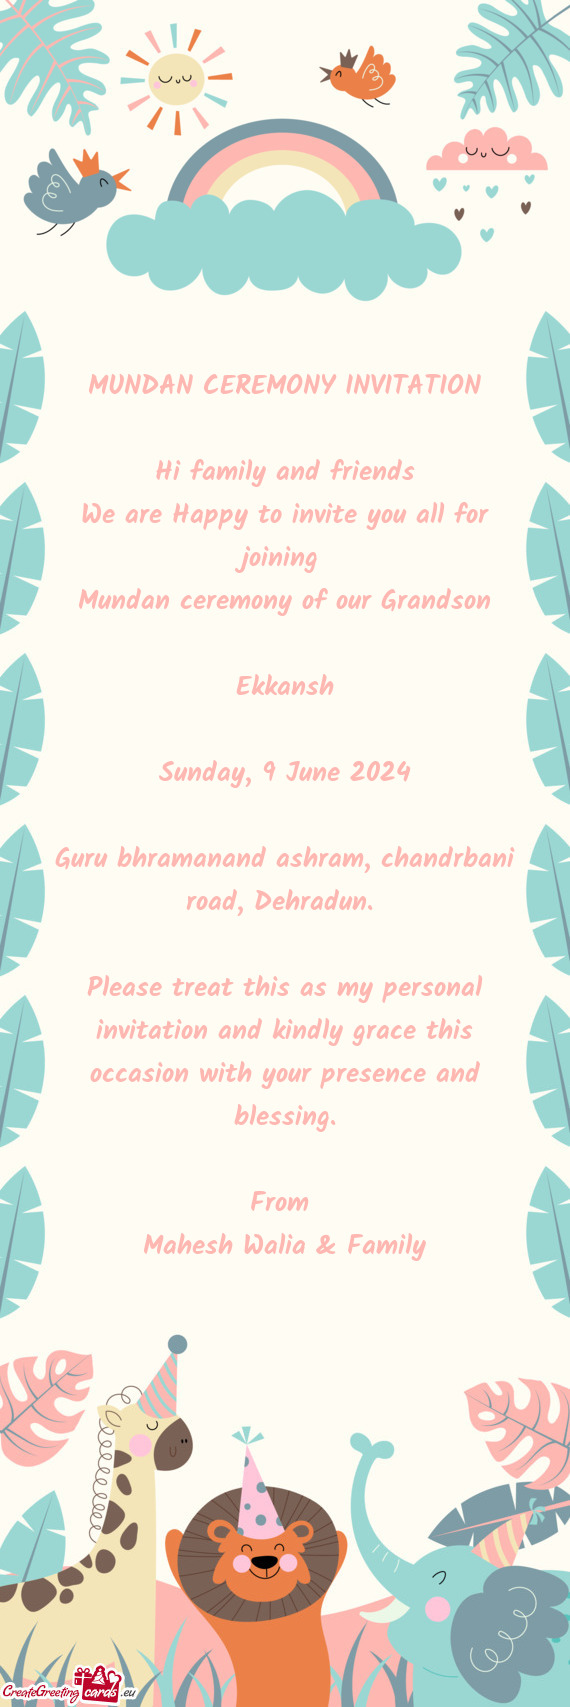 Ndan ceremony of our Grandson Ekkansh Sunday